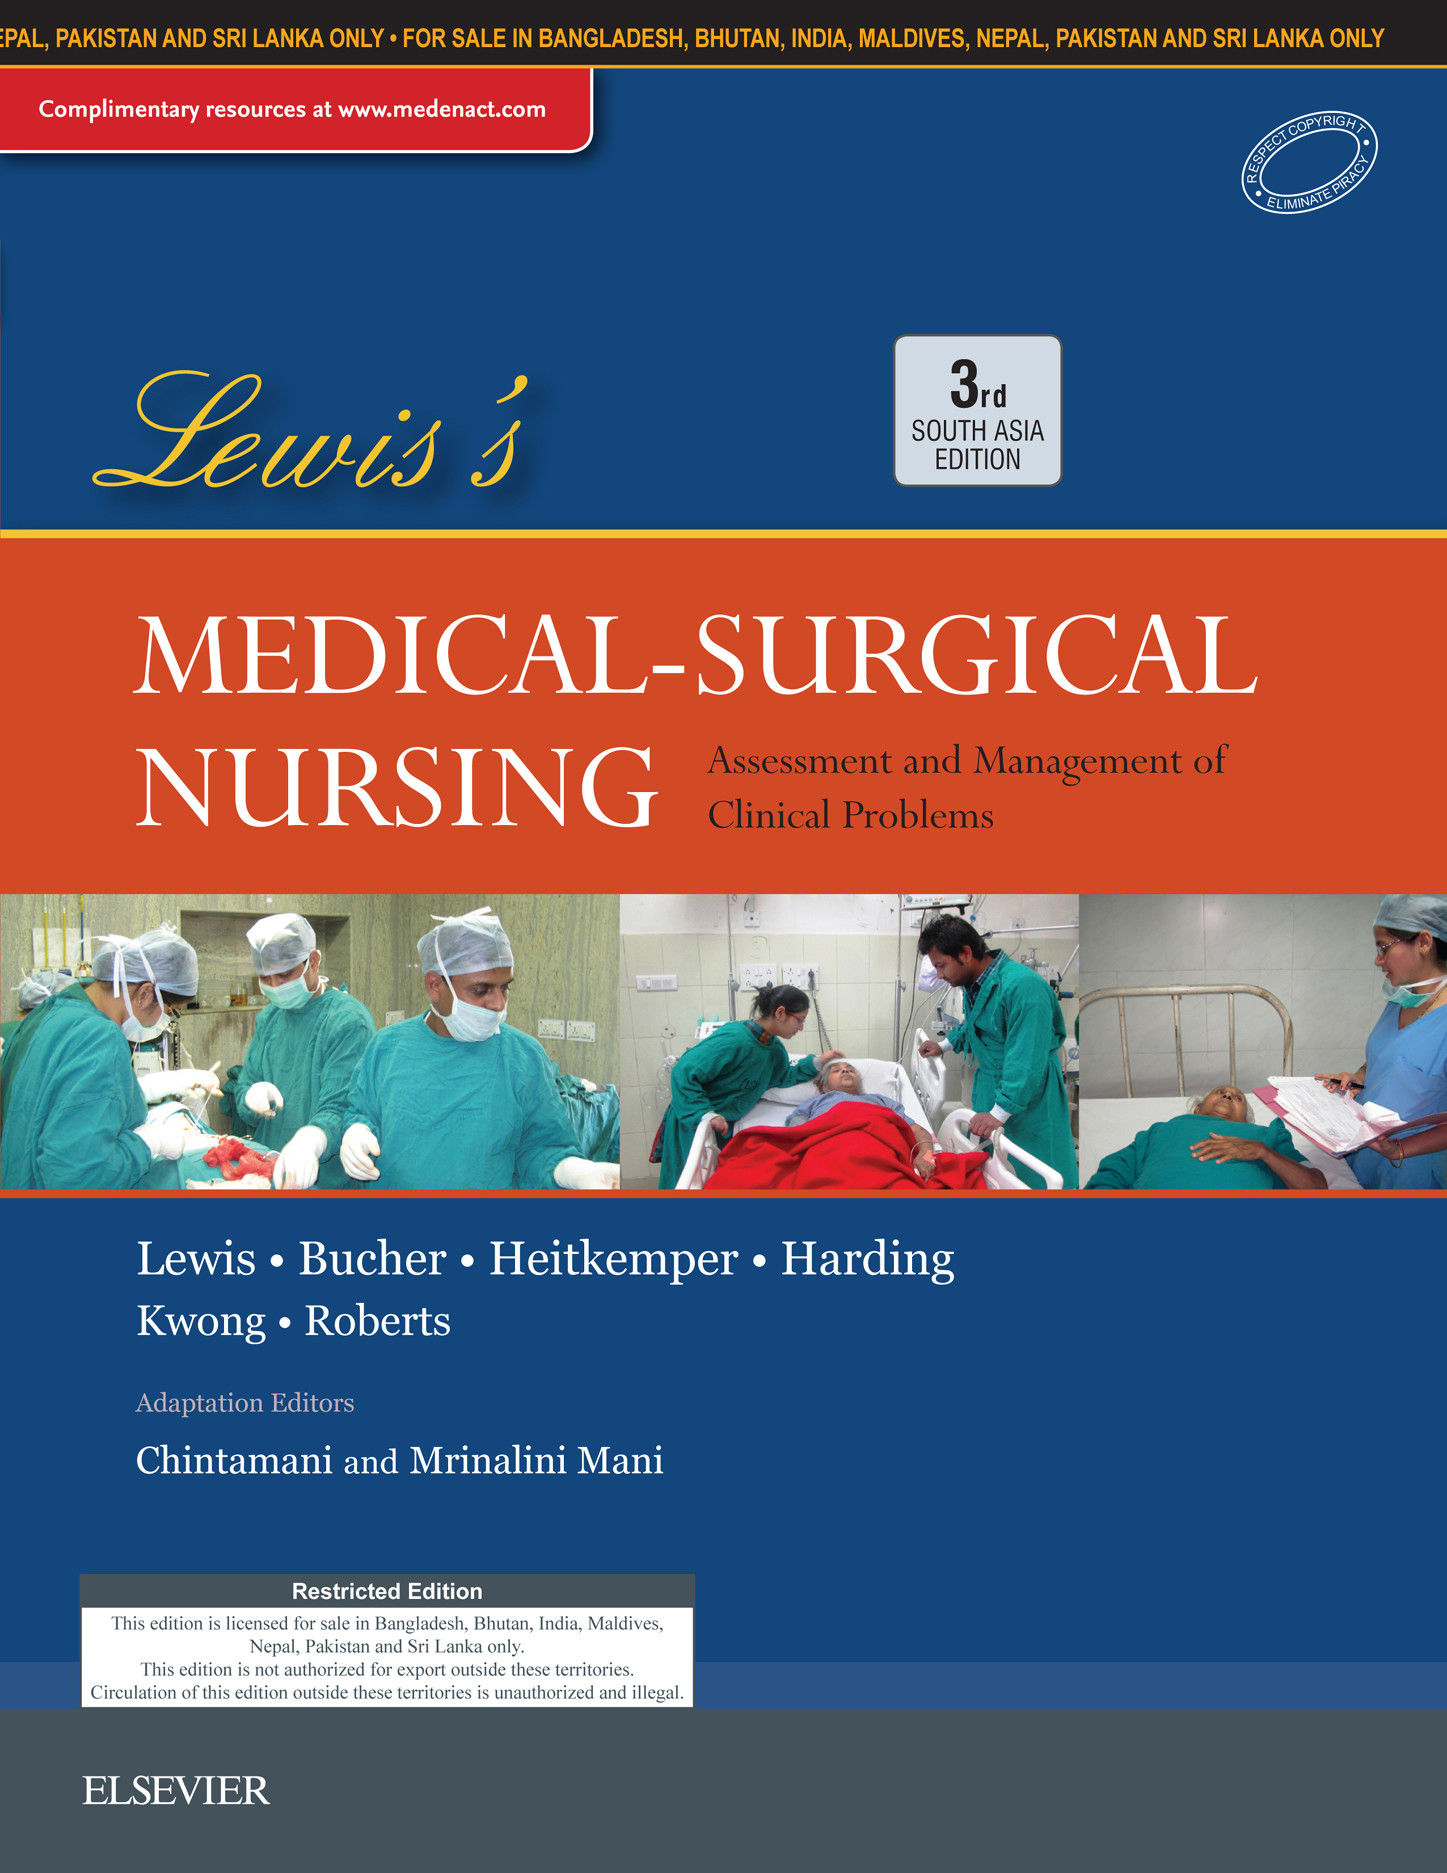 Lewis's Medical-Surgical Nursing, Third South Asia Edition - E-Book